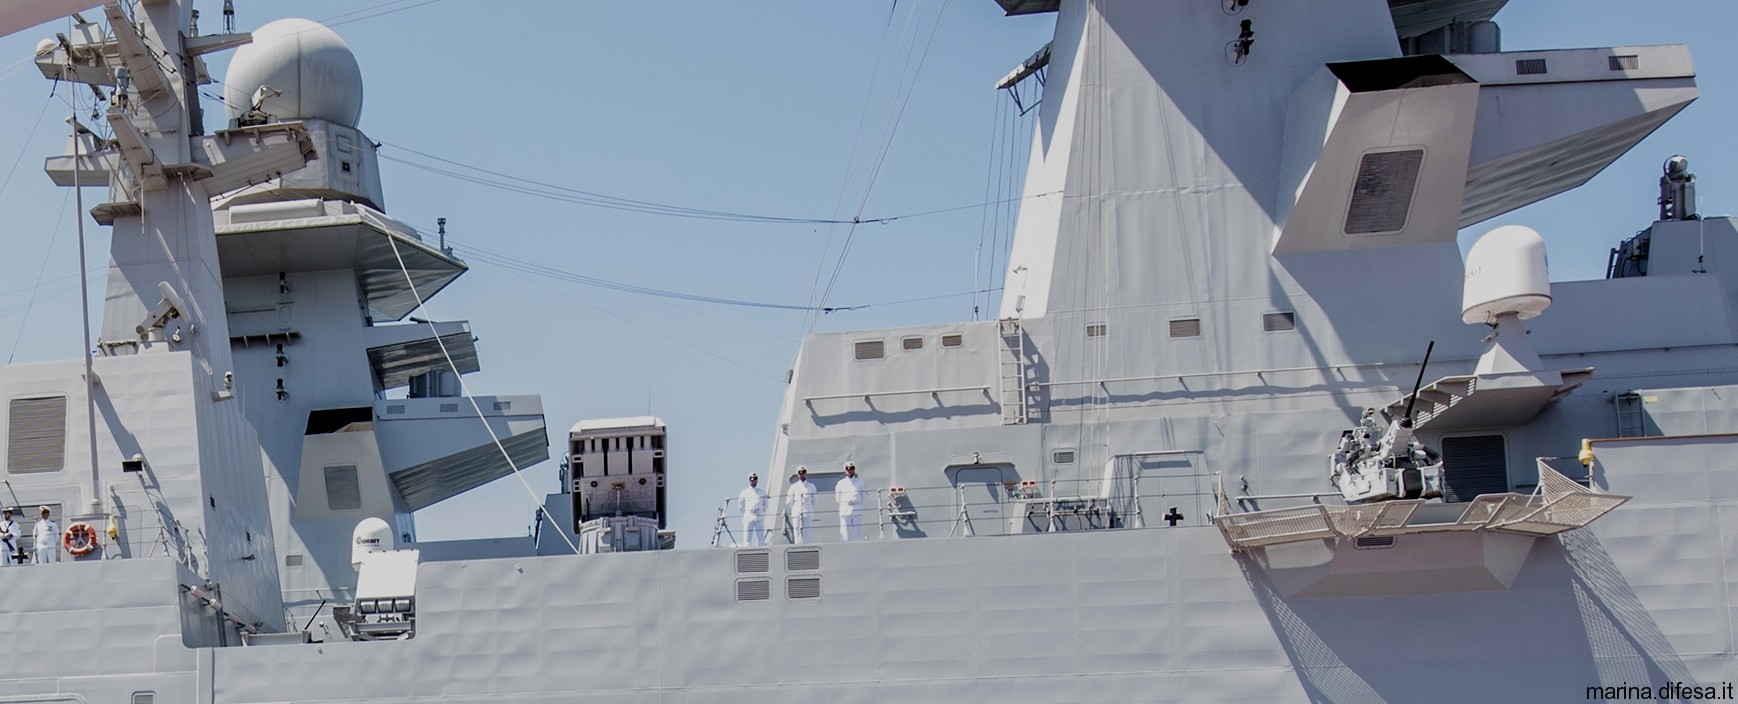 bergamini fremm class guided missile frigate ffgh italian navy marina militare slat anti torpedo system decoy 58w